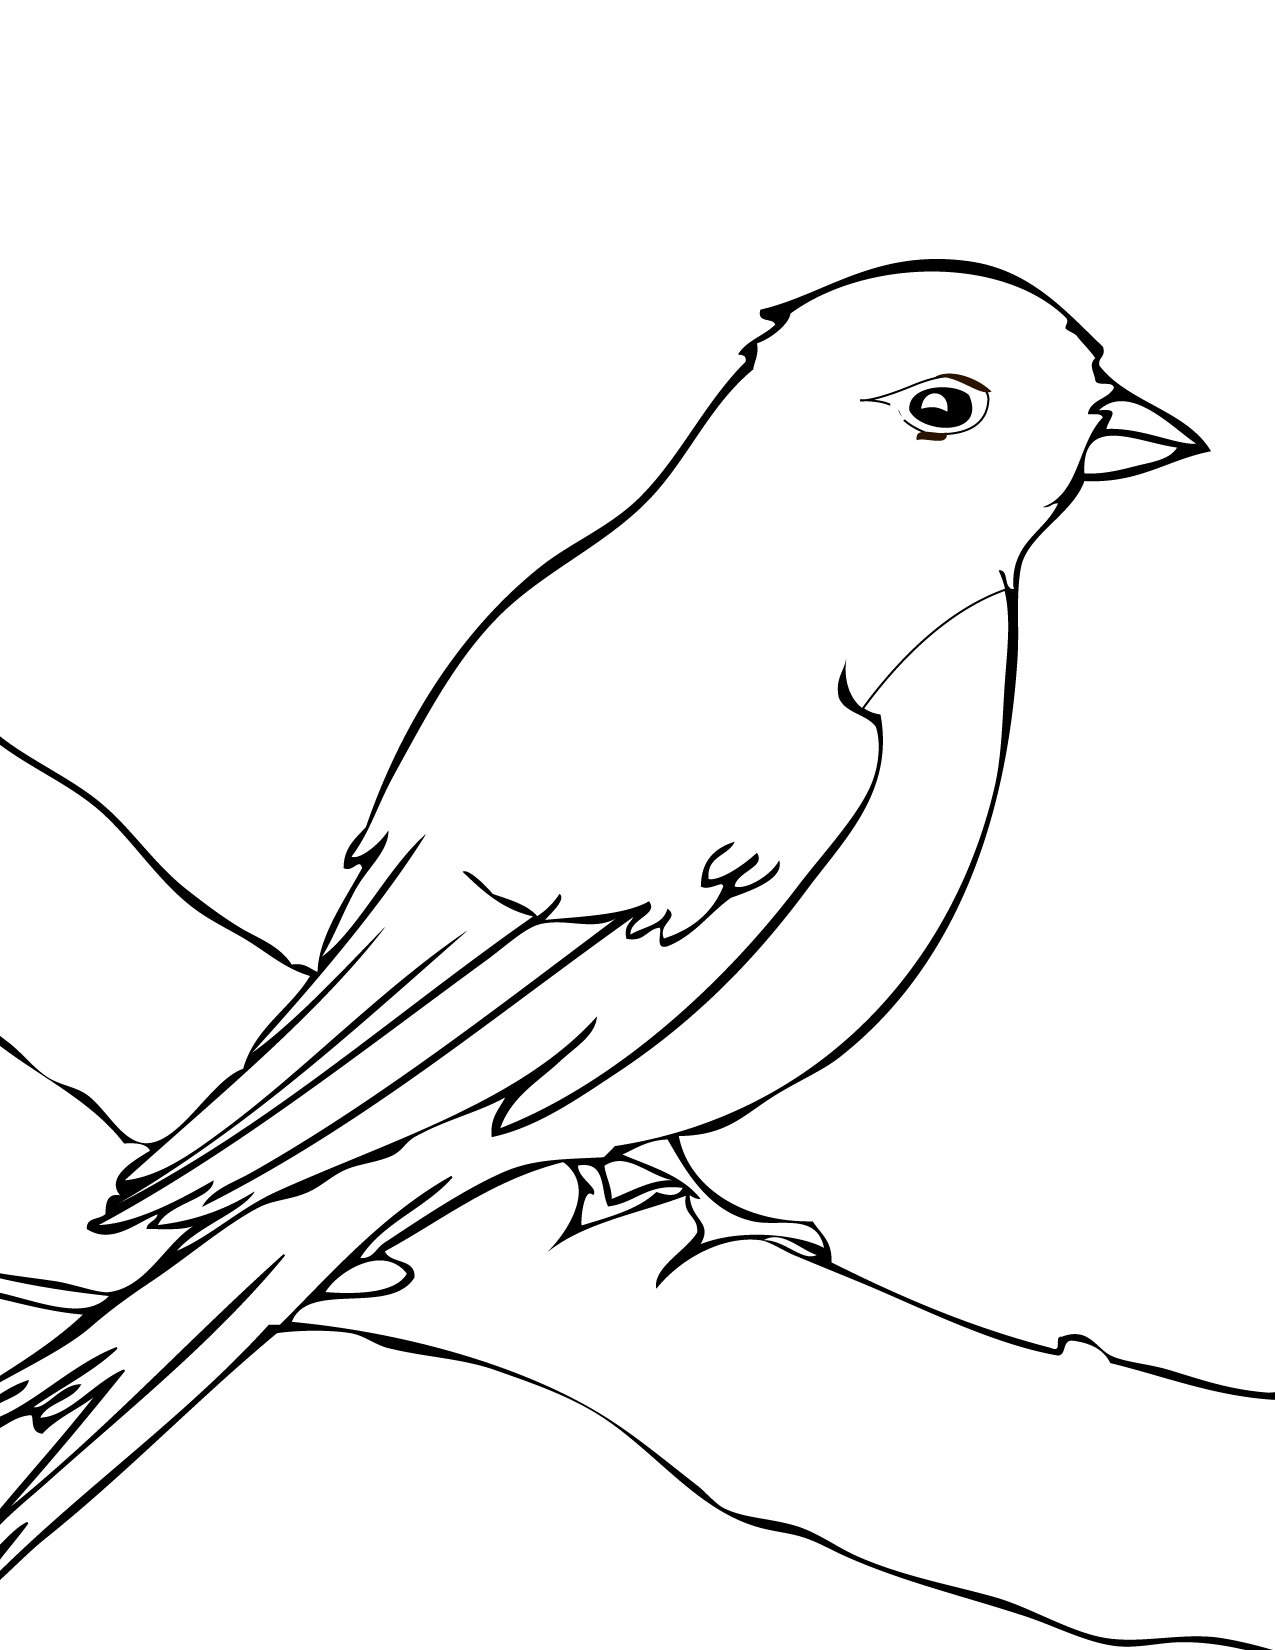 Blackbird coloring #3, Download drawings